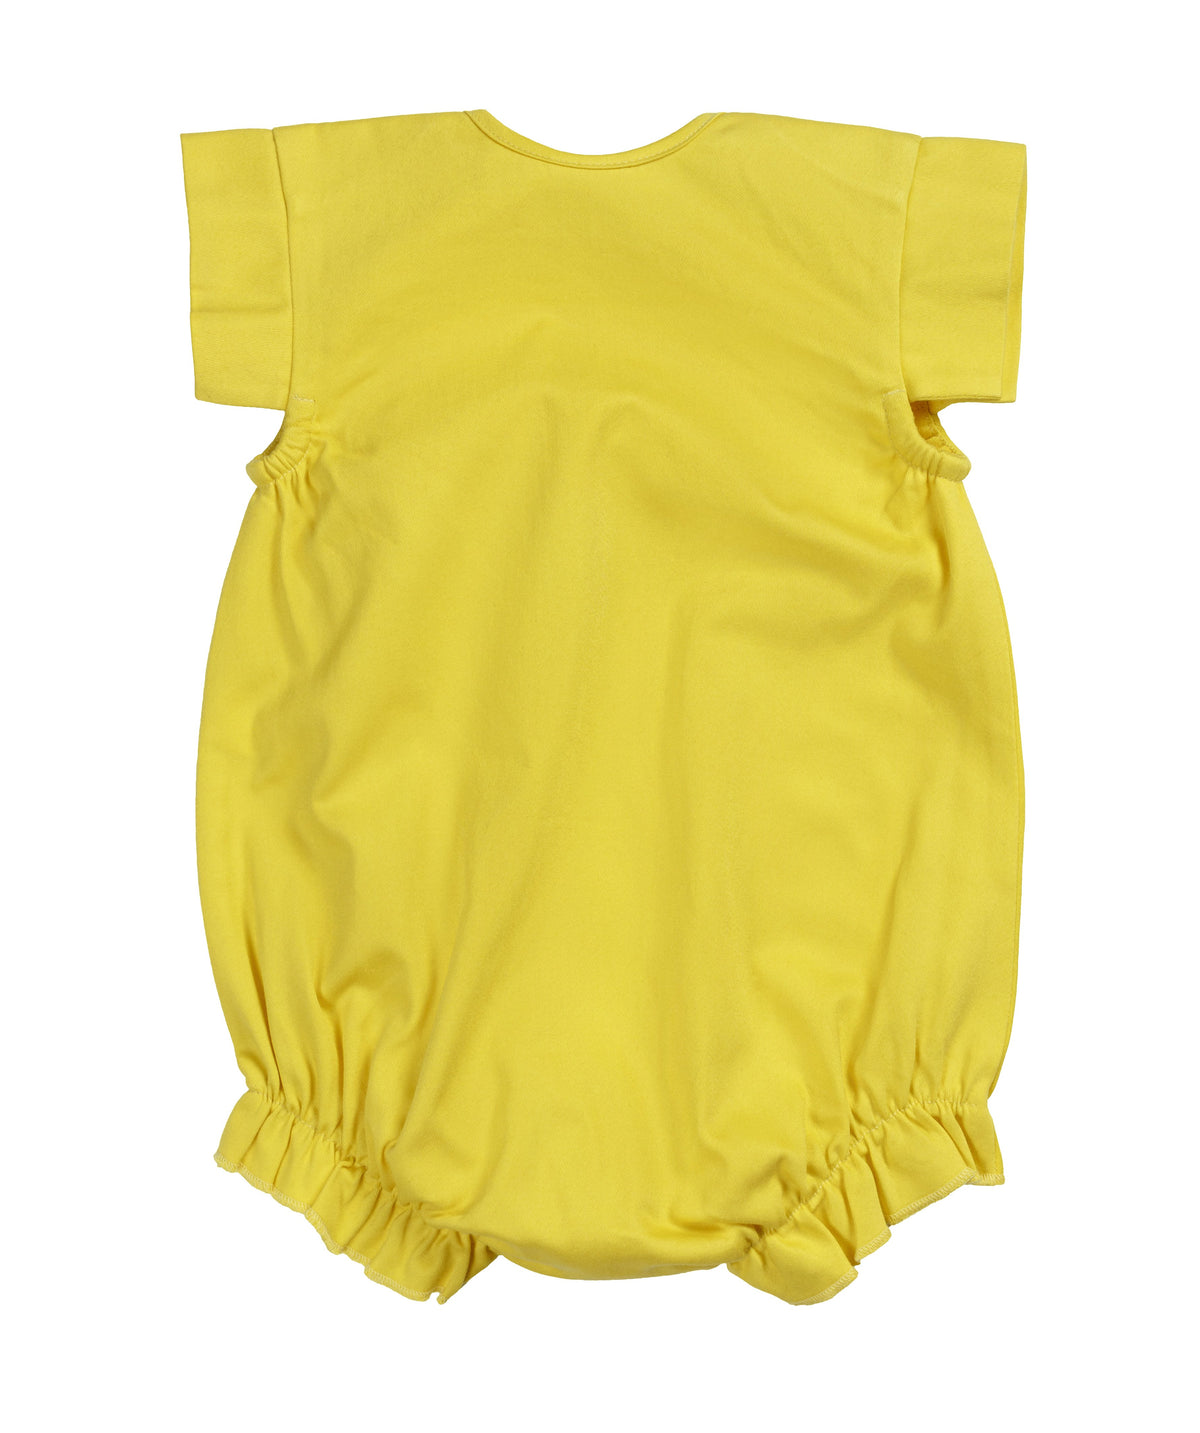 The Canopy Baby Body Suit - Infantium Victoria